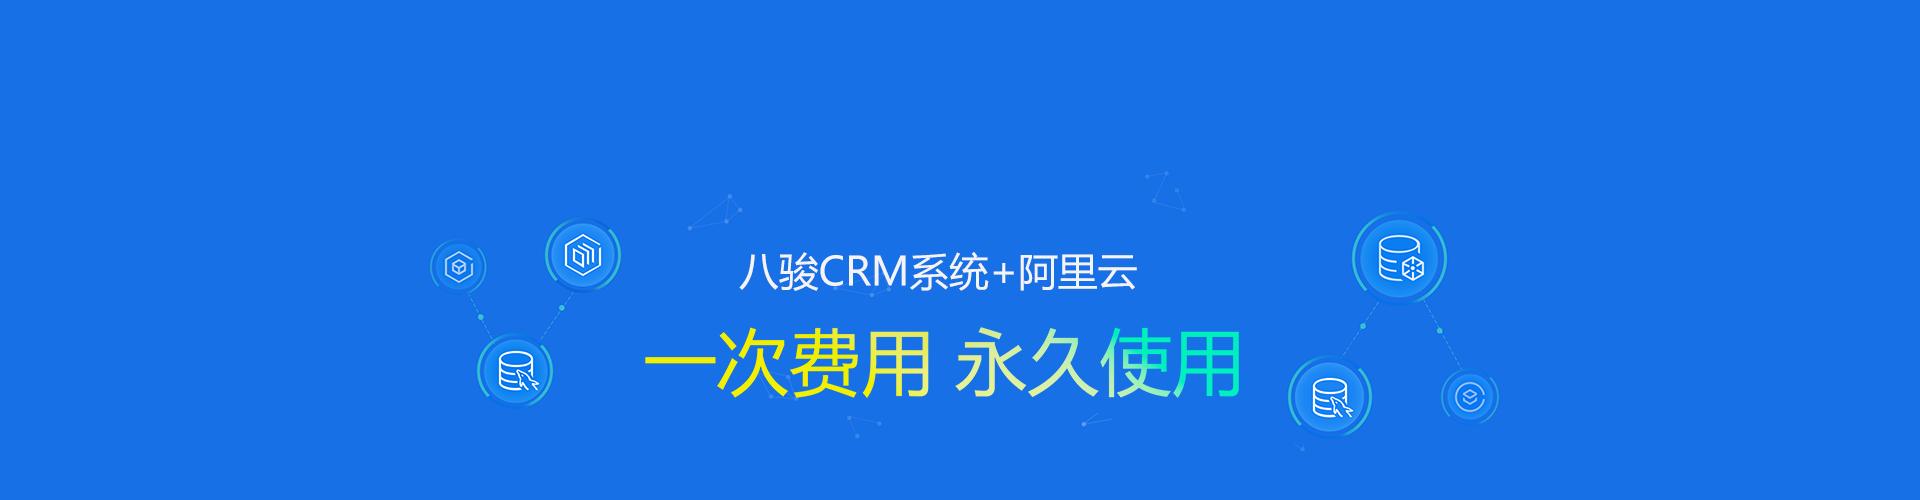 crm客户关系管理系统-八骏crm_浙江企业首选crm品牌,crm定制开发公司